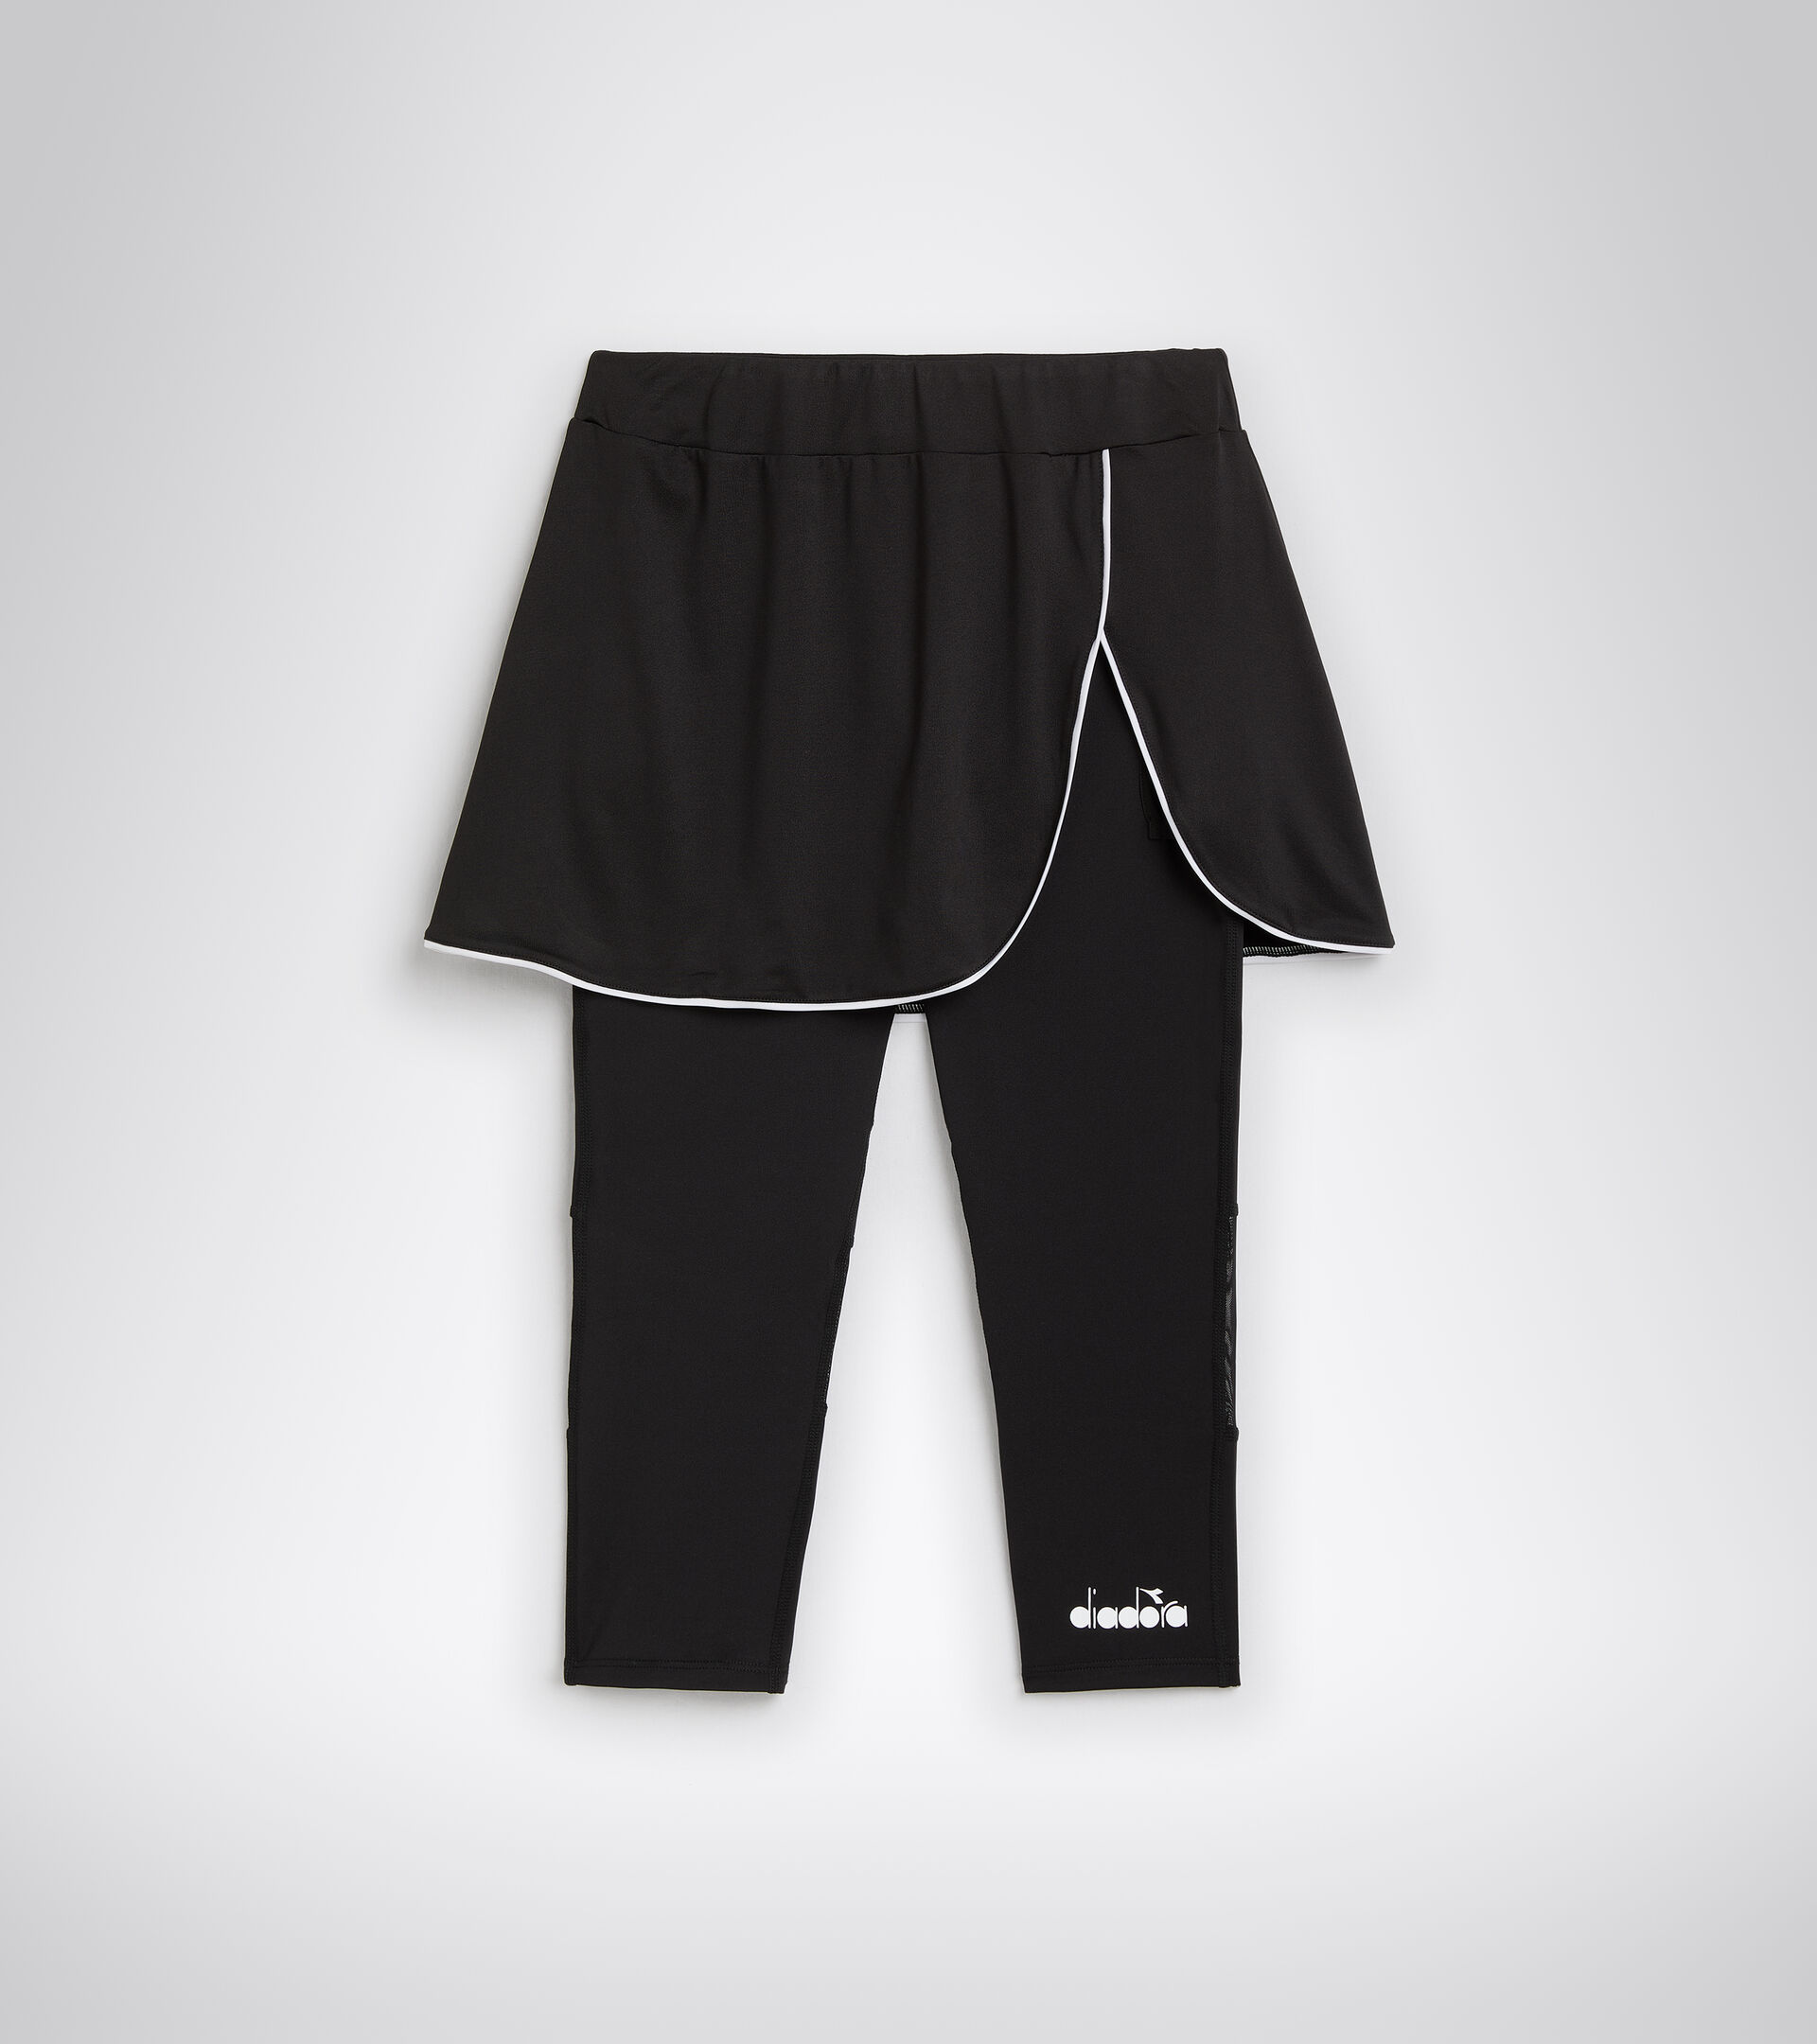 L. POWER SKIRT Tennis skirt with integrated 3/4-length leggings - Women's -  Diadora Online Store US